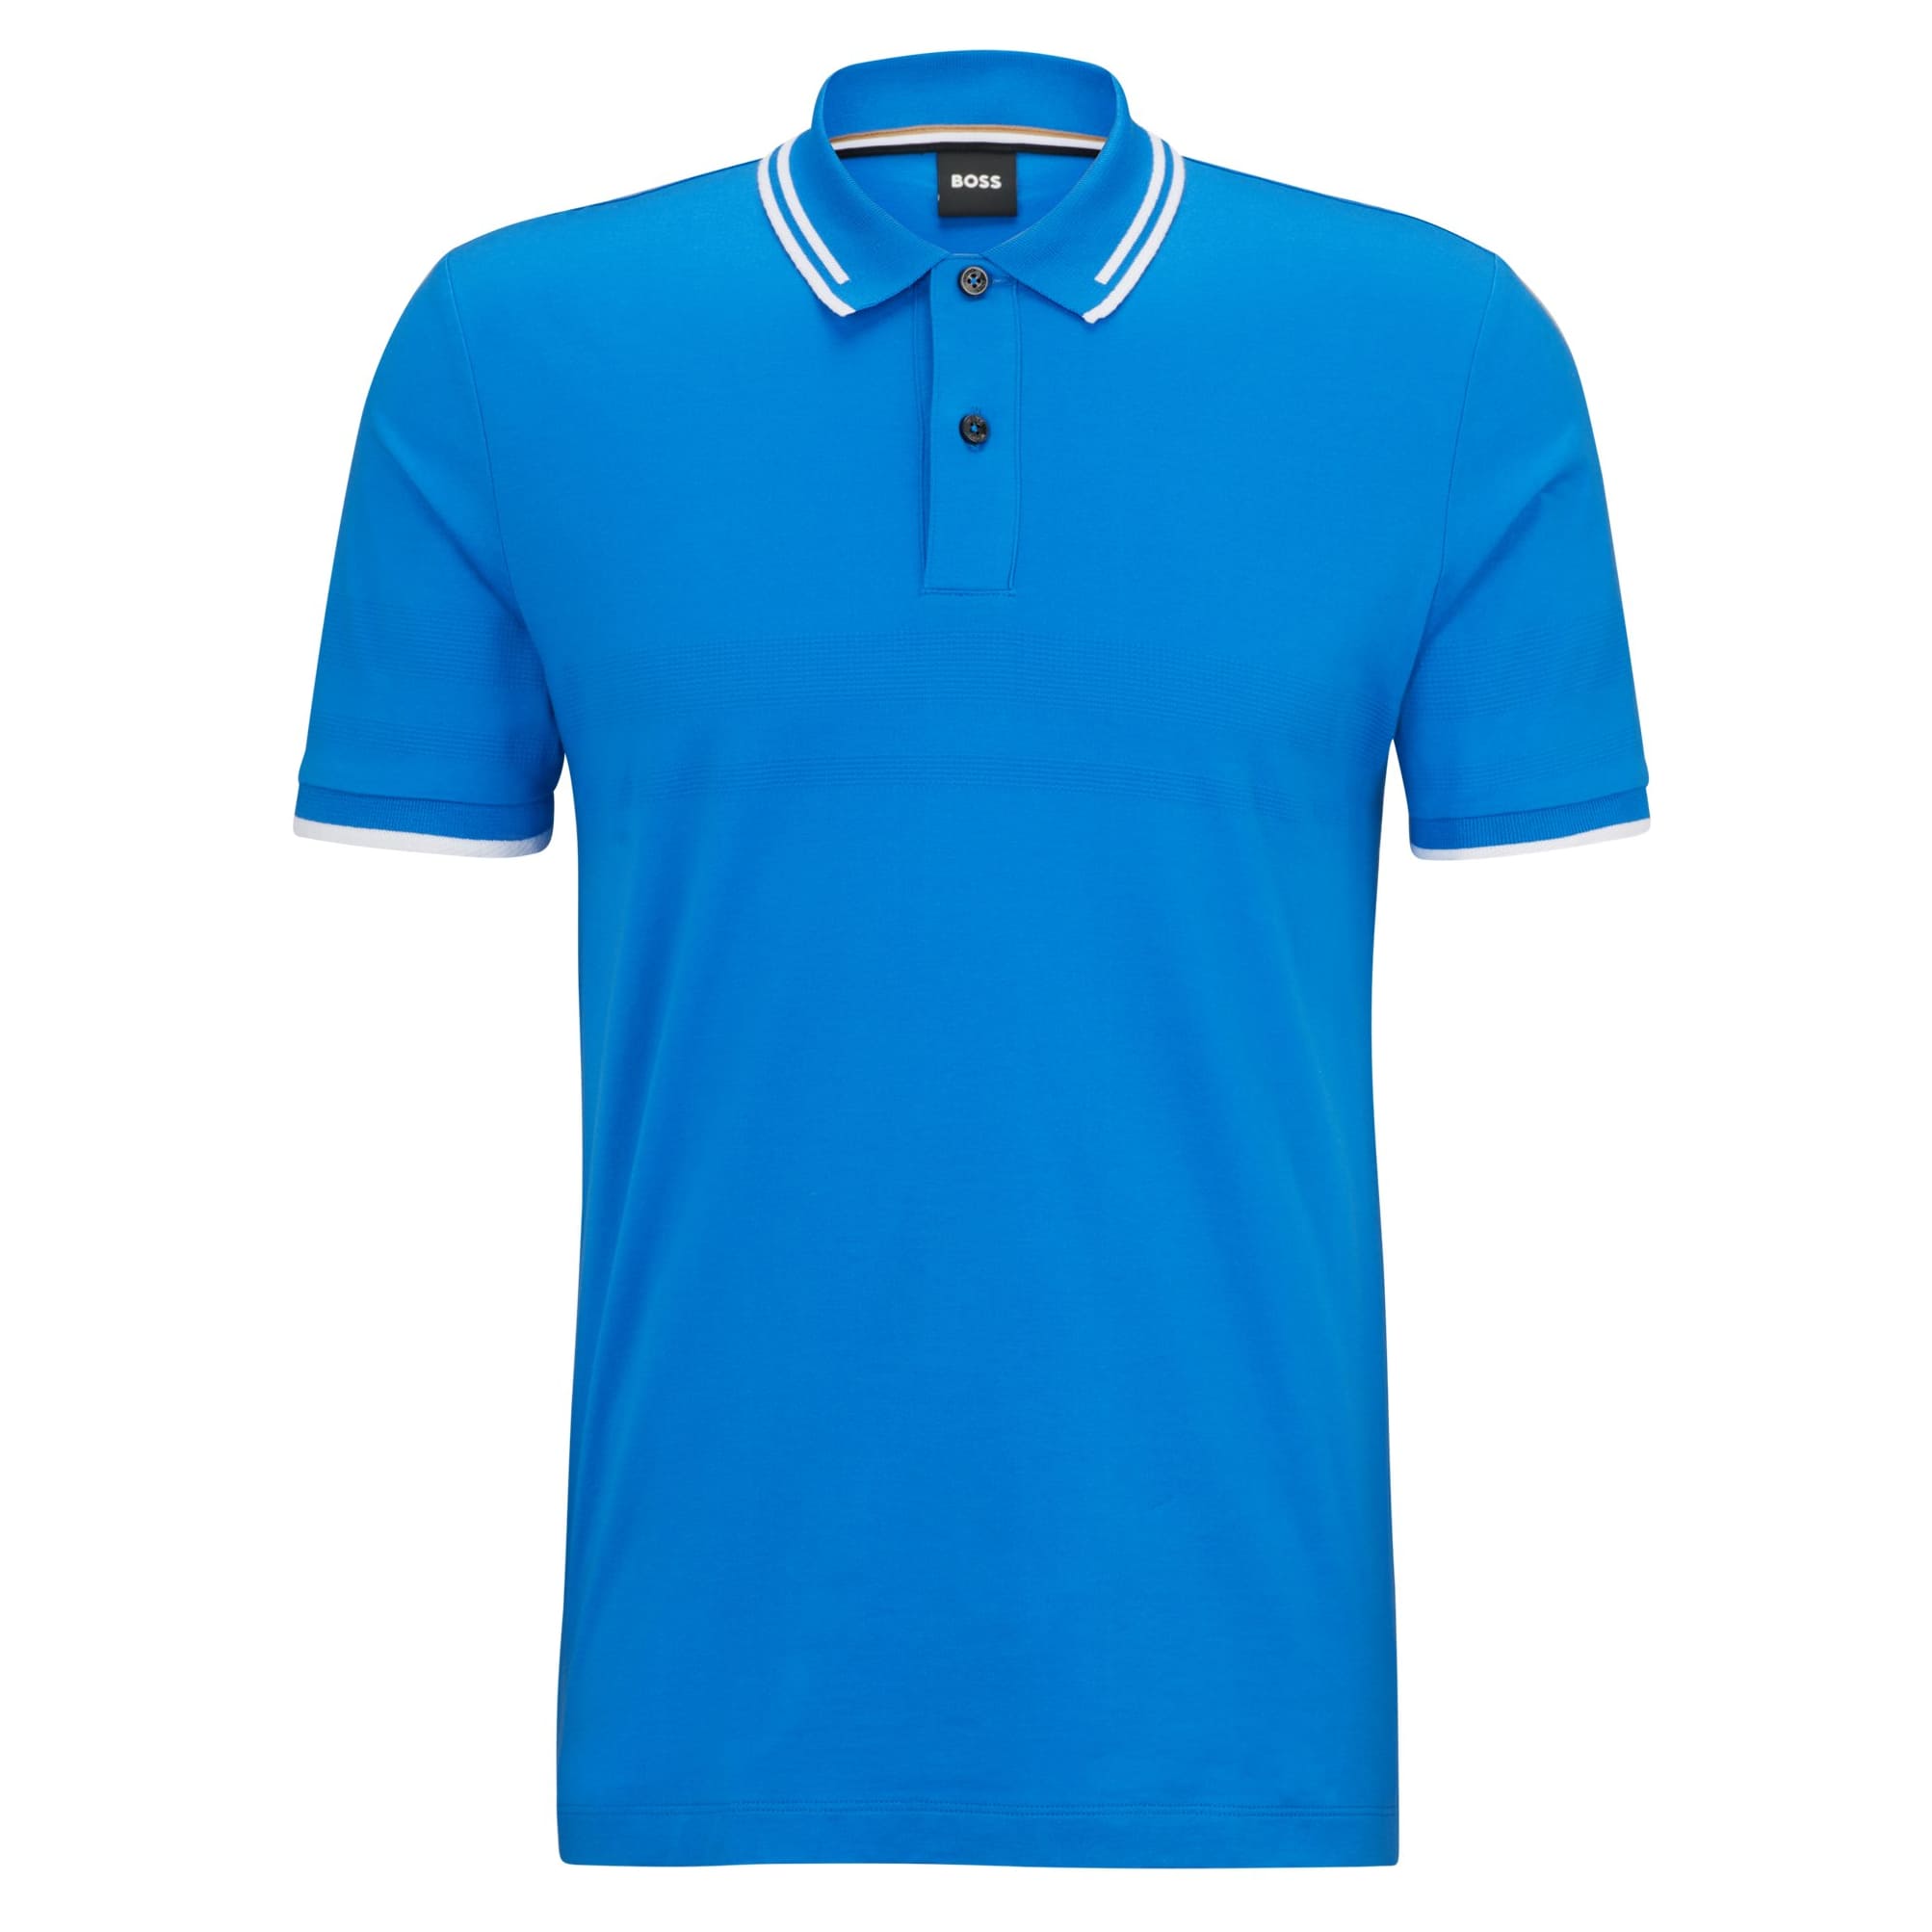 цена Рубашка-поло Boss Interlock Jacquard Stripes, голубой/белый